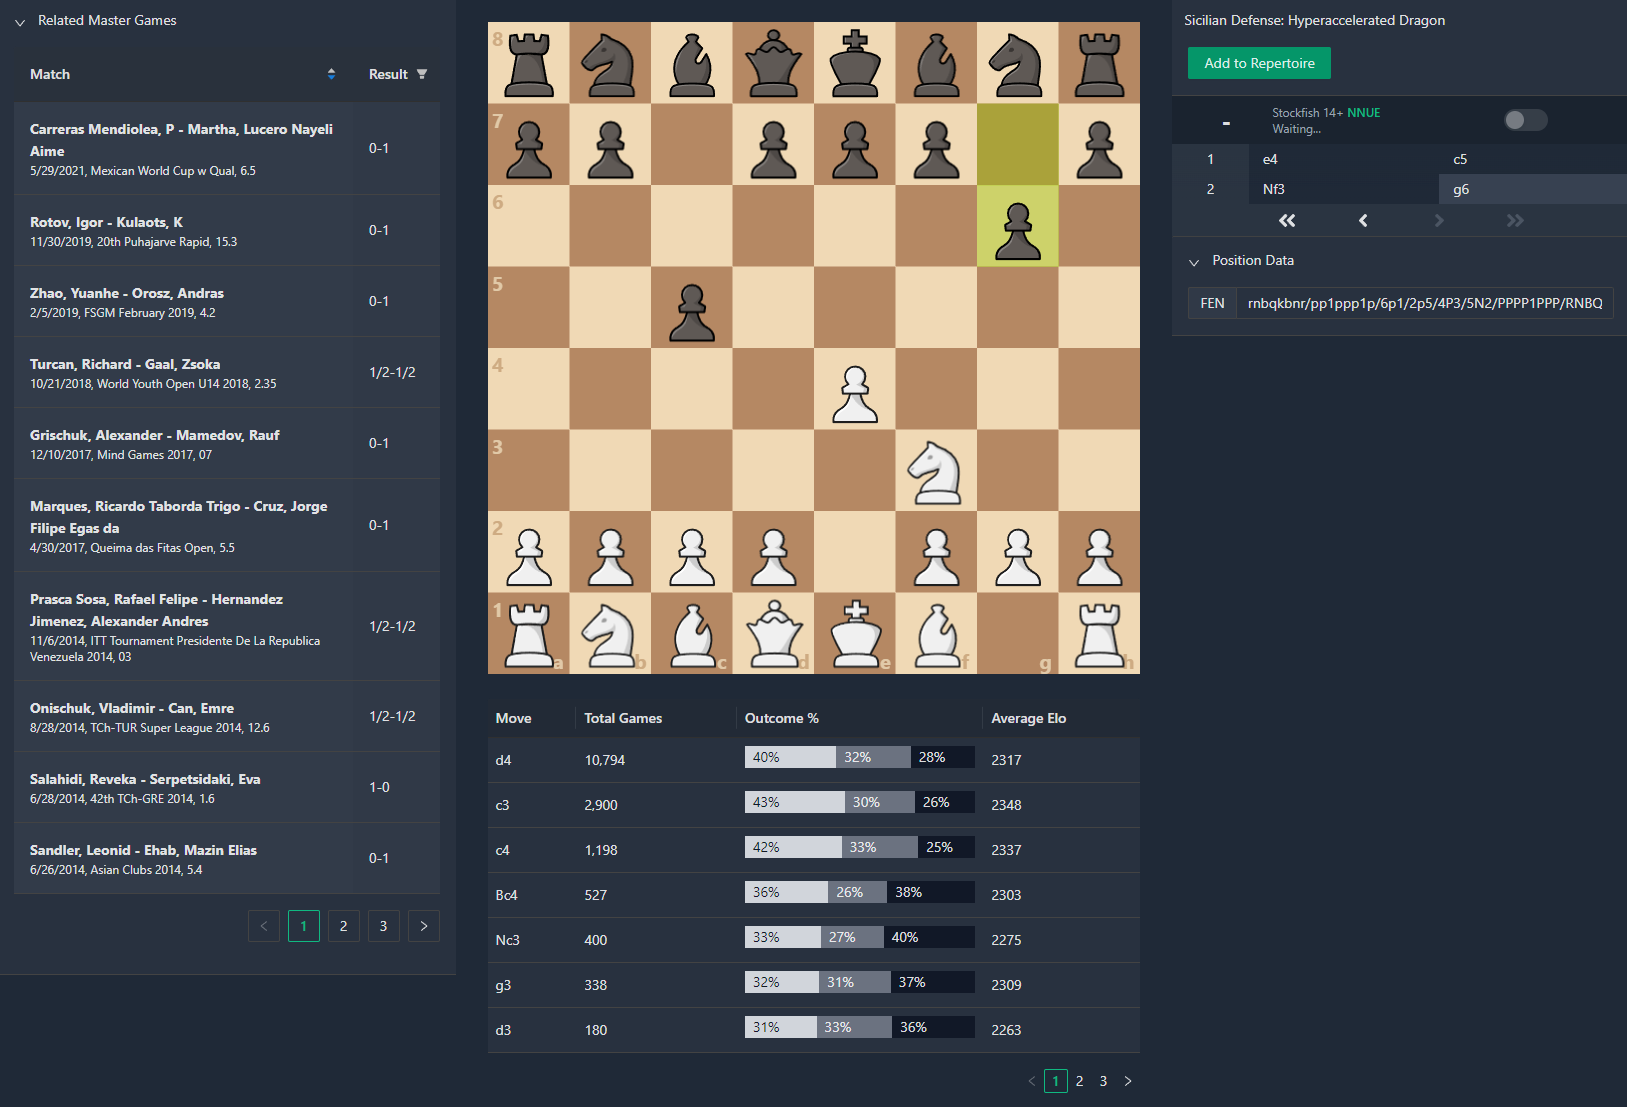  Chess Games Database & Community